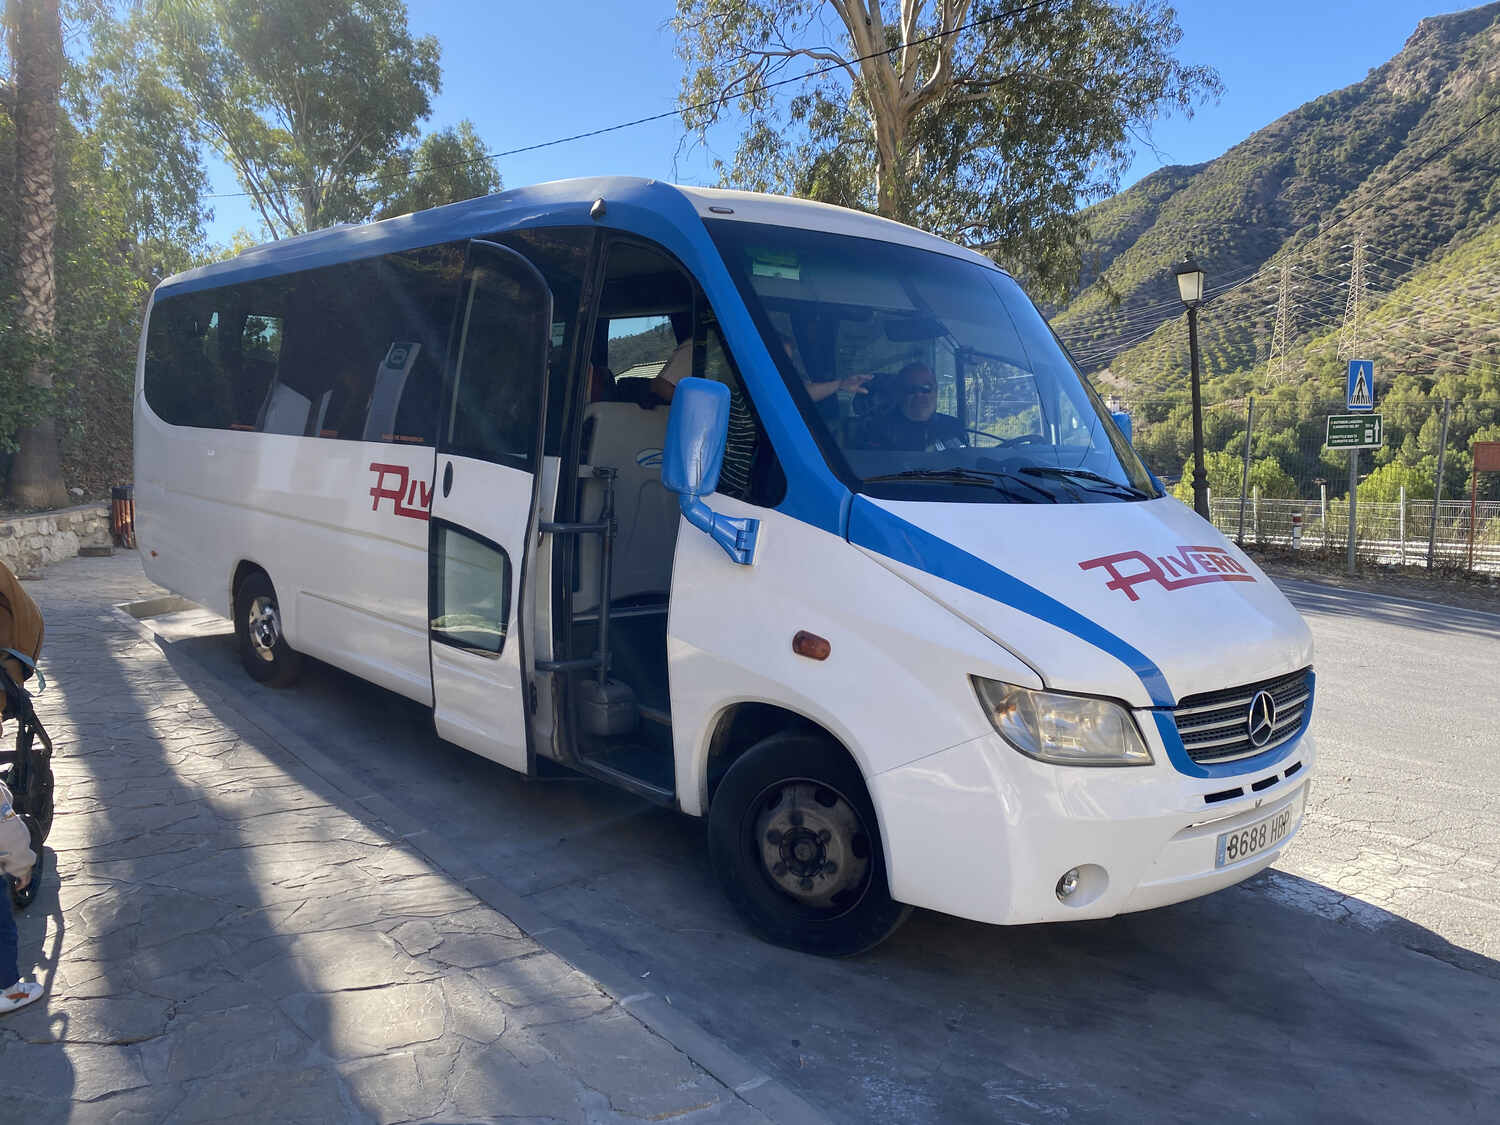 Shuttle bus to Caminito del rey - Parking at the hike - Malaga to Caminito Del Rey